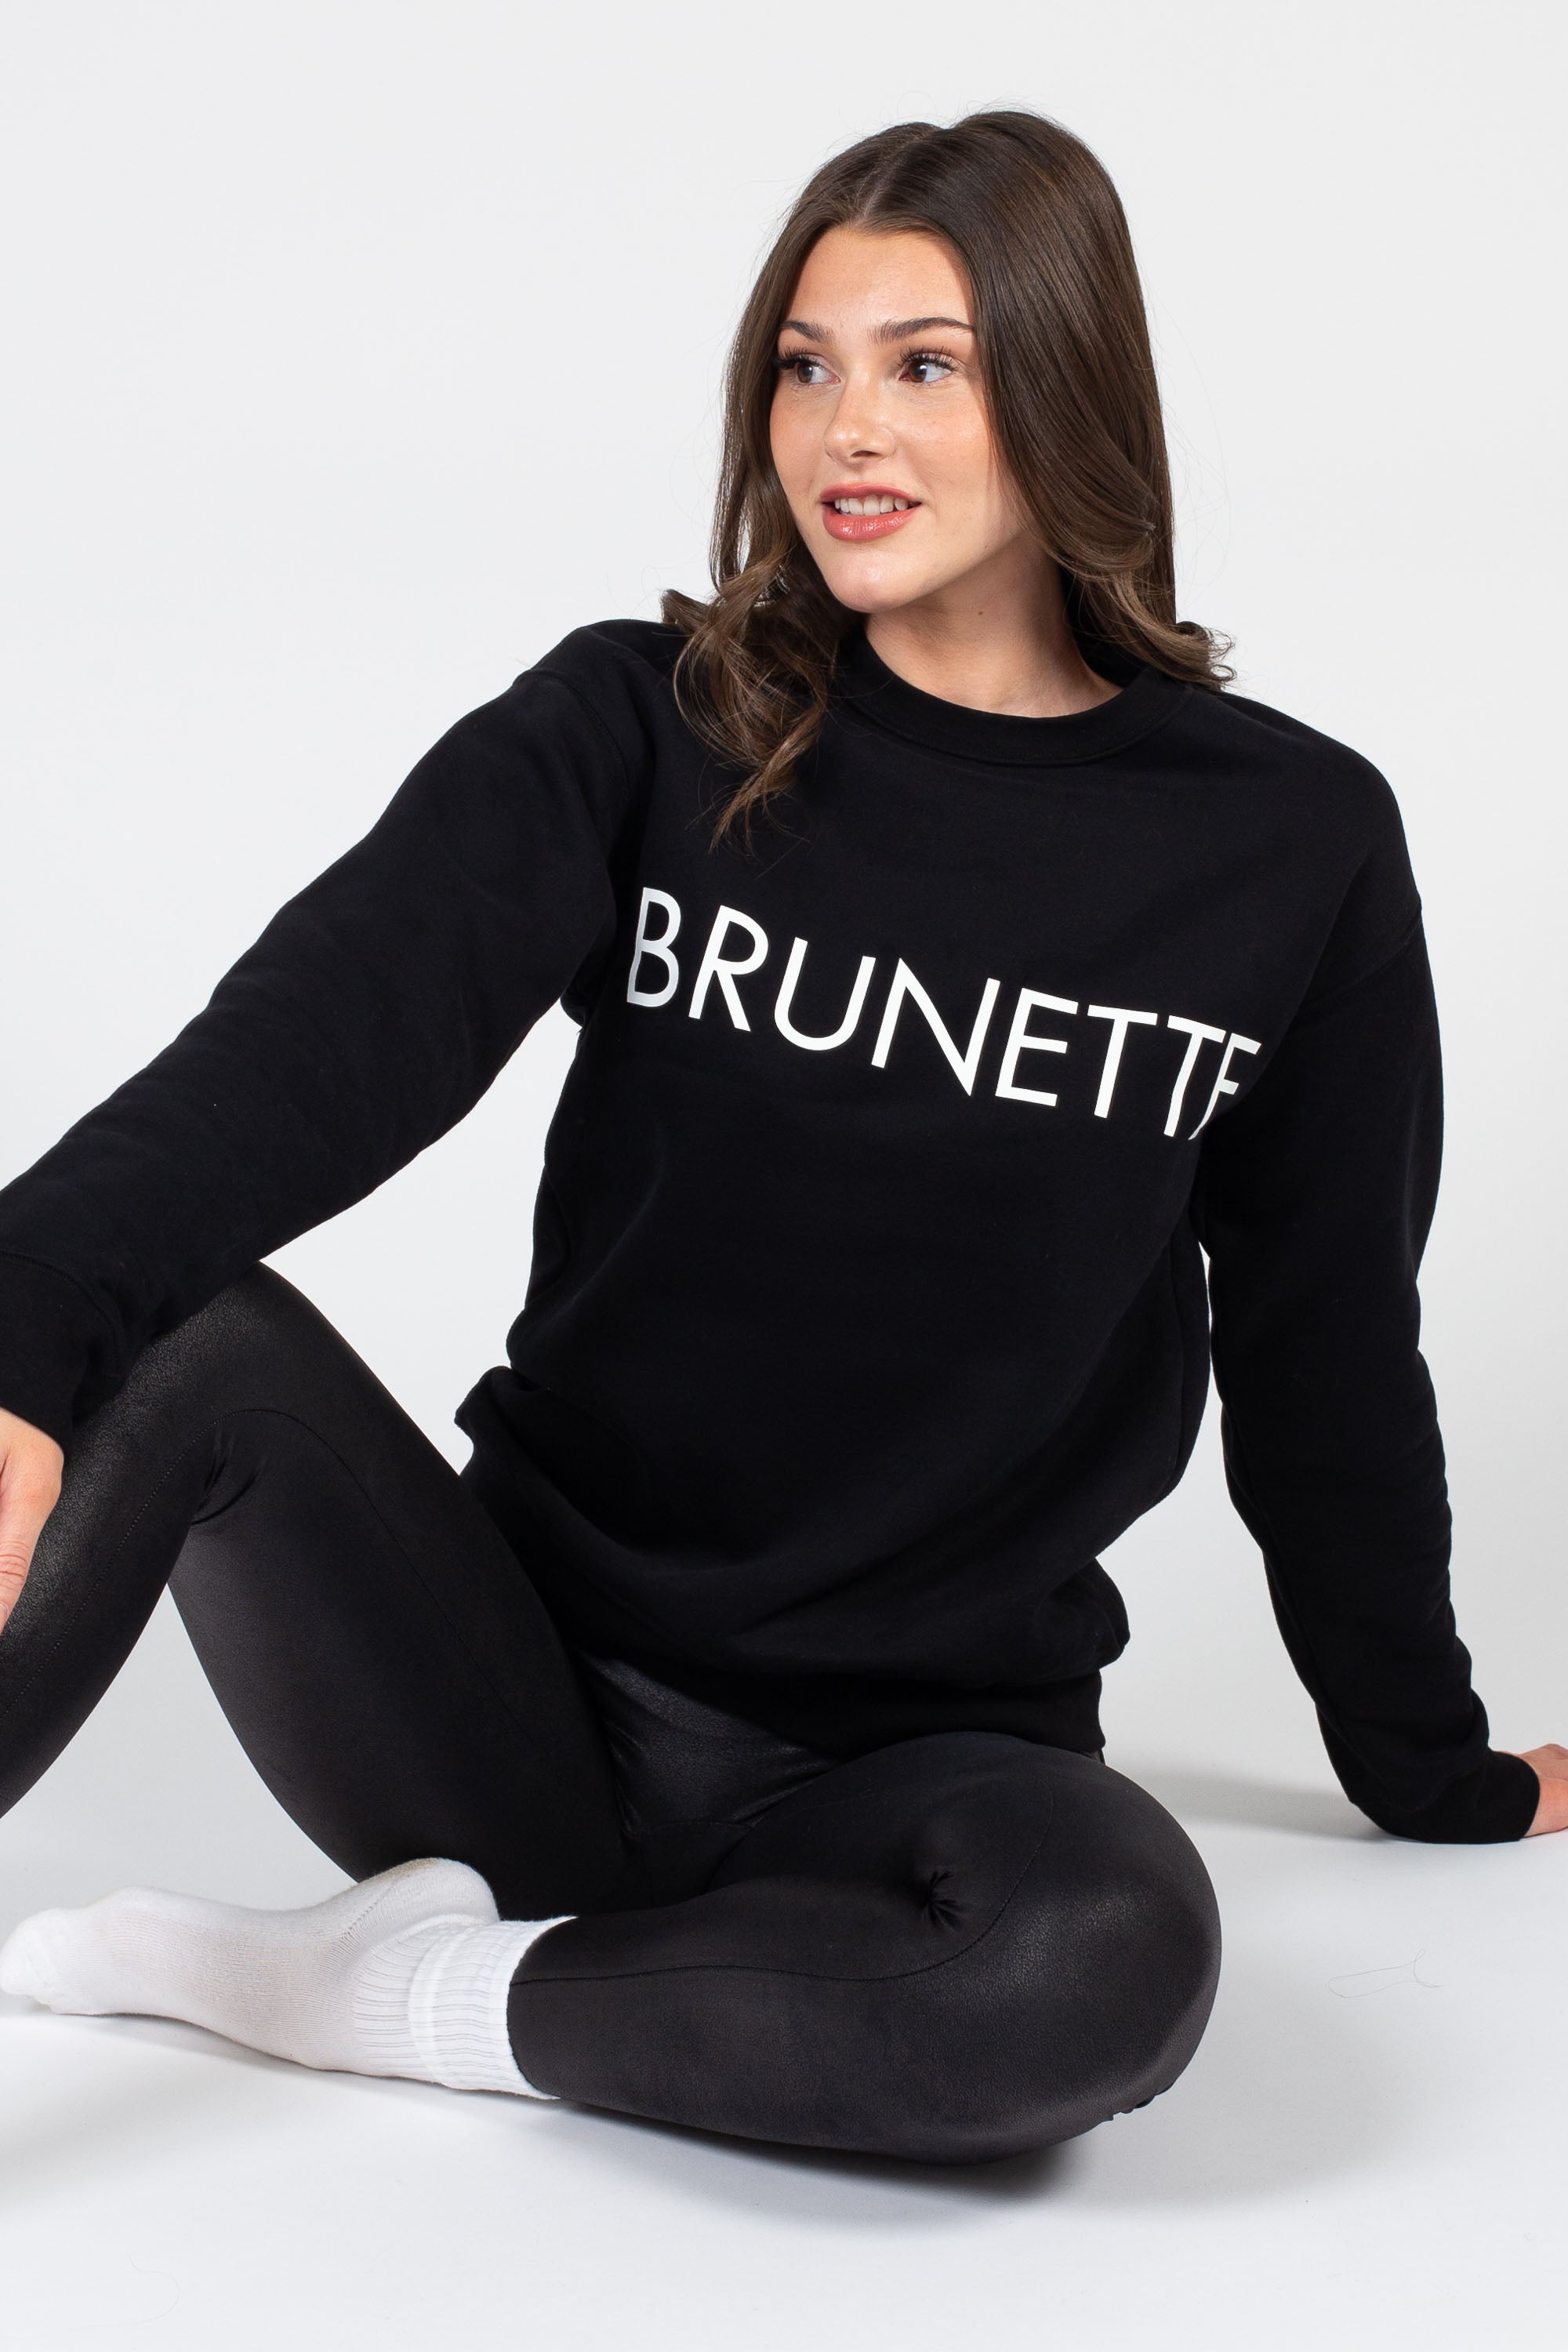 Brunette the Label "Brunette" Classic Crewneck